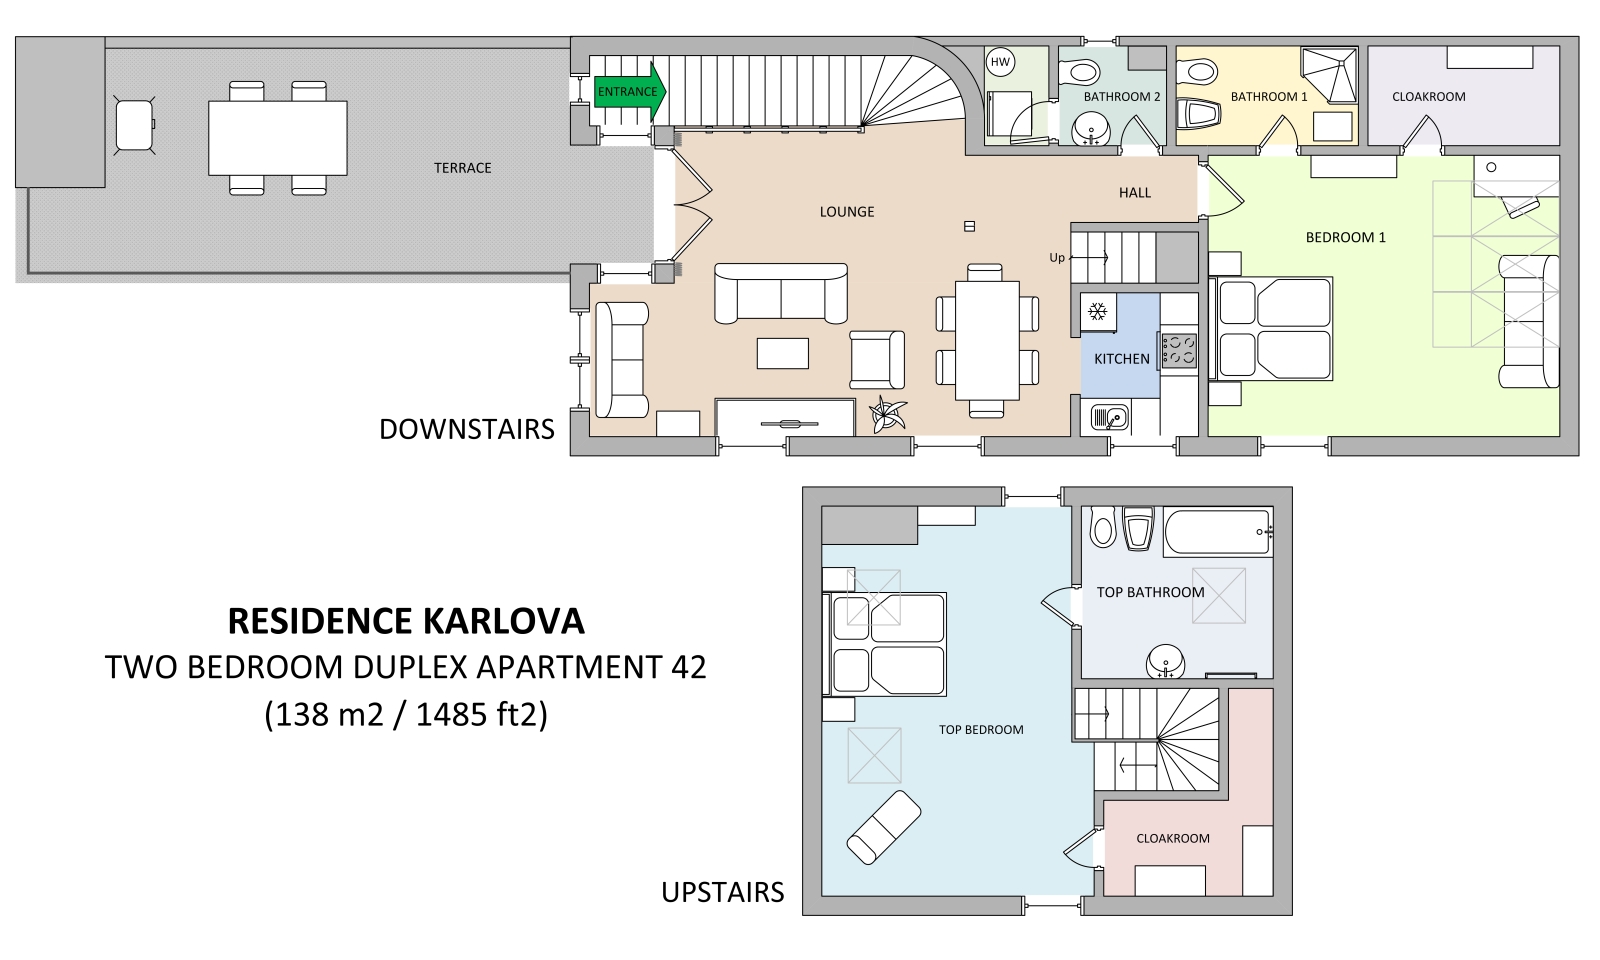 Floorplan of apartment 42 in Residence Karlova in Prague